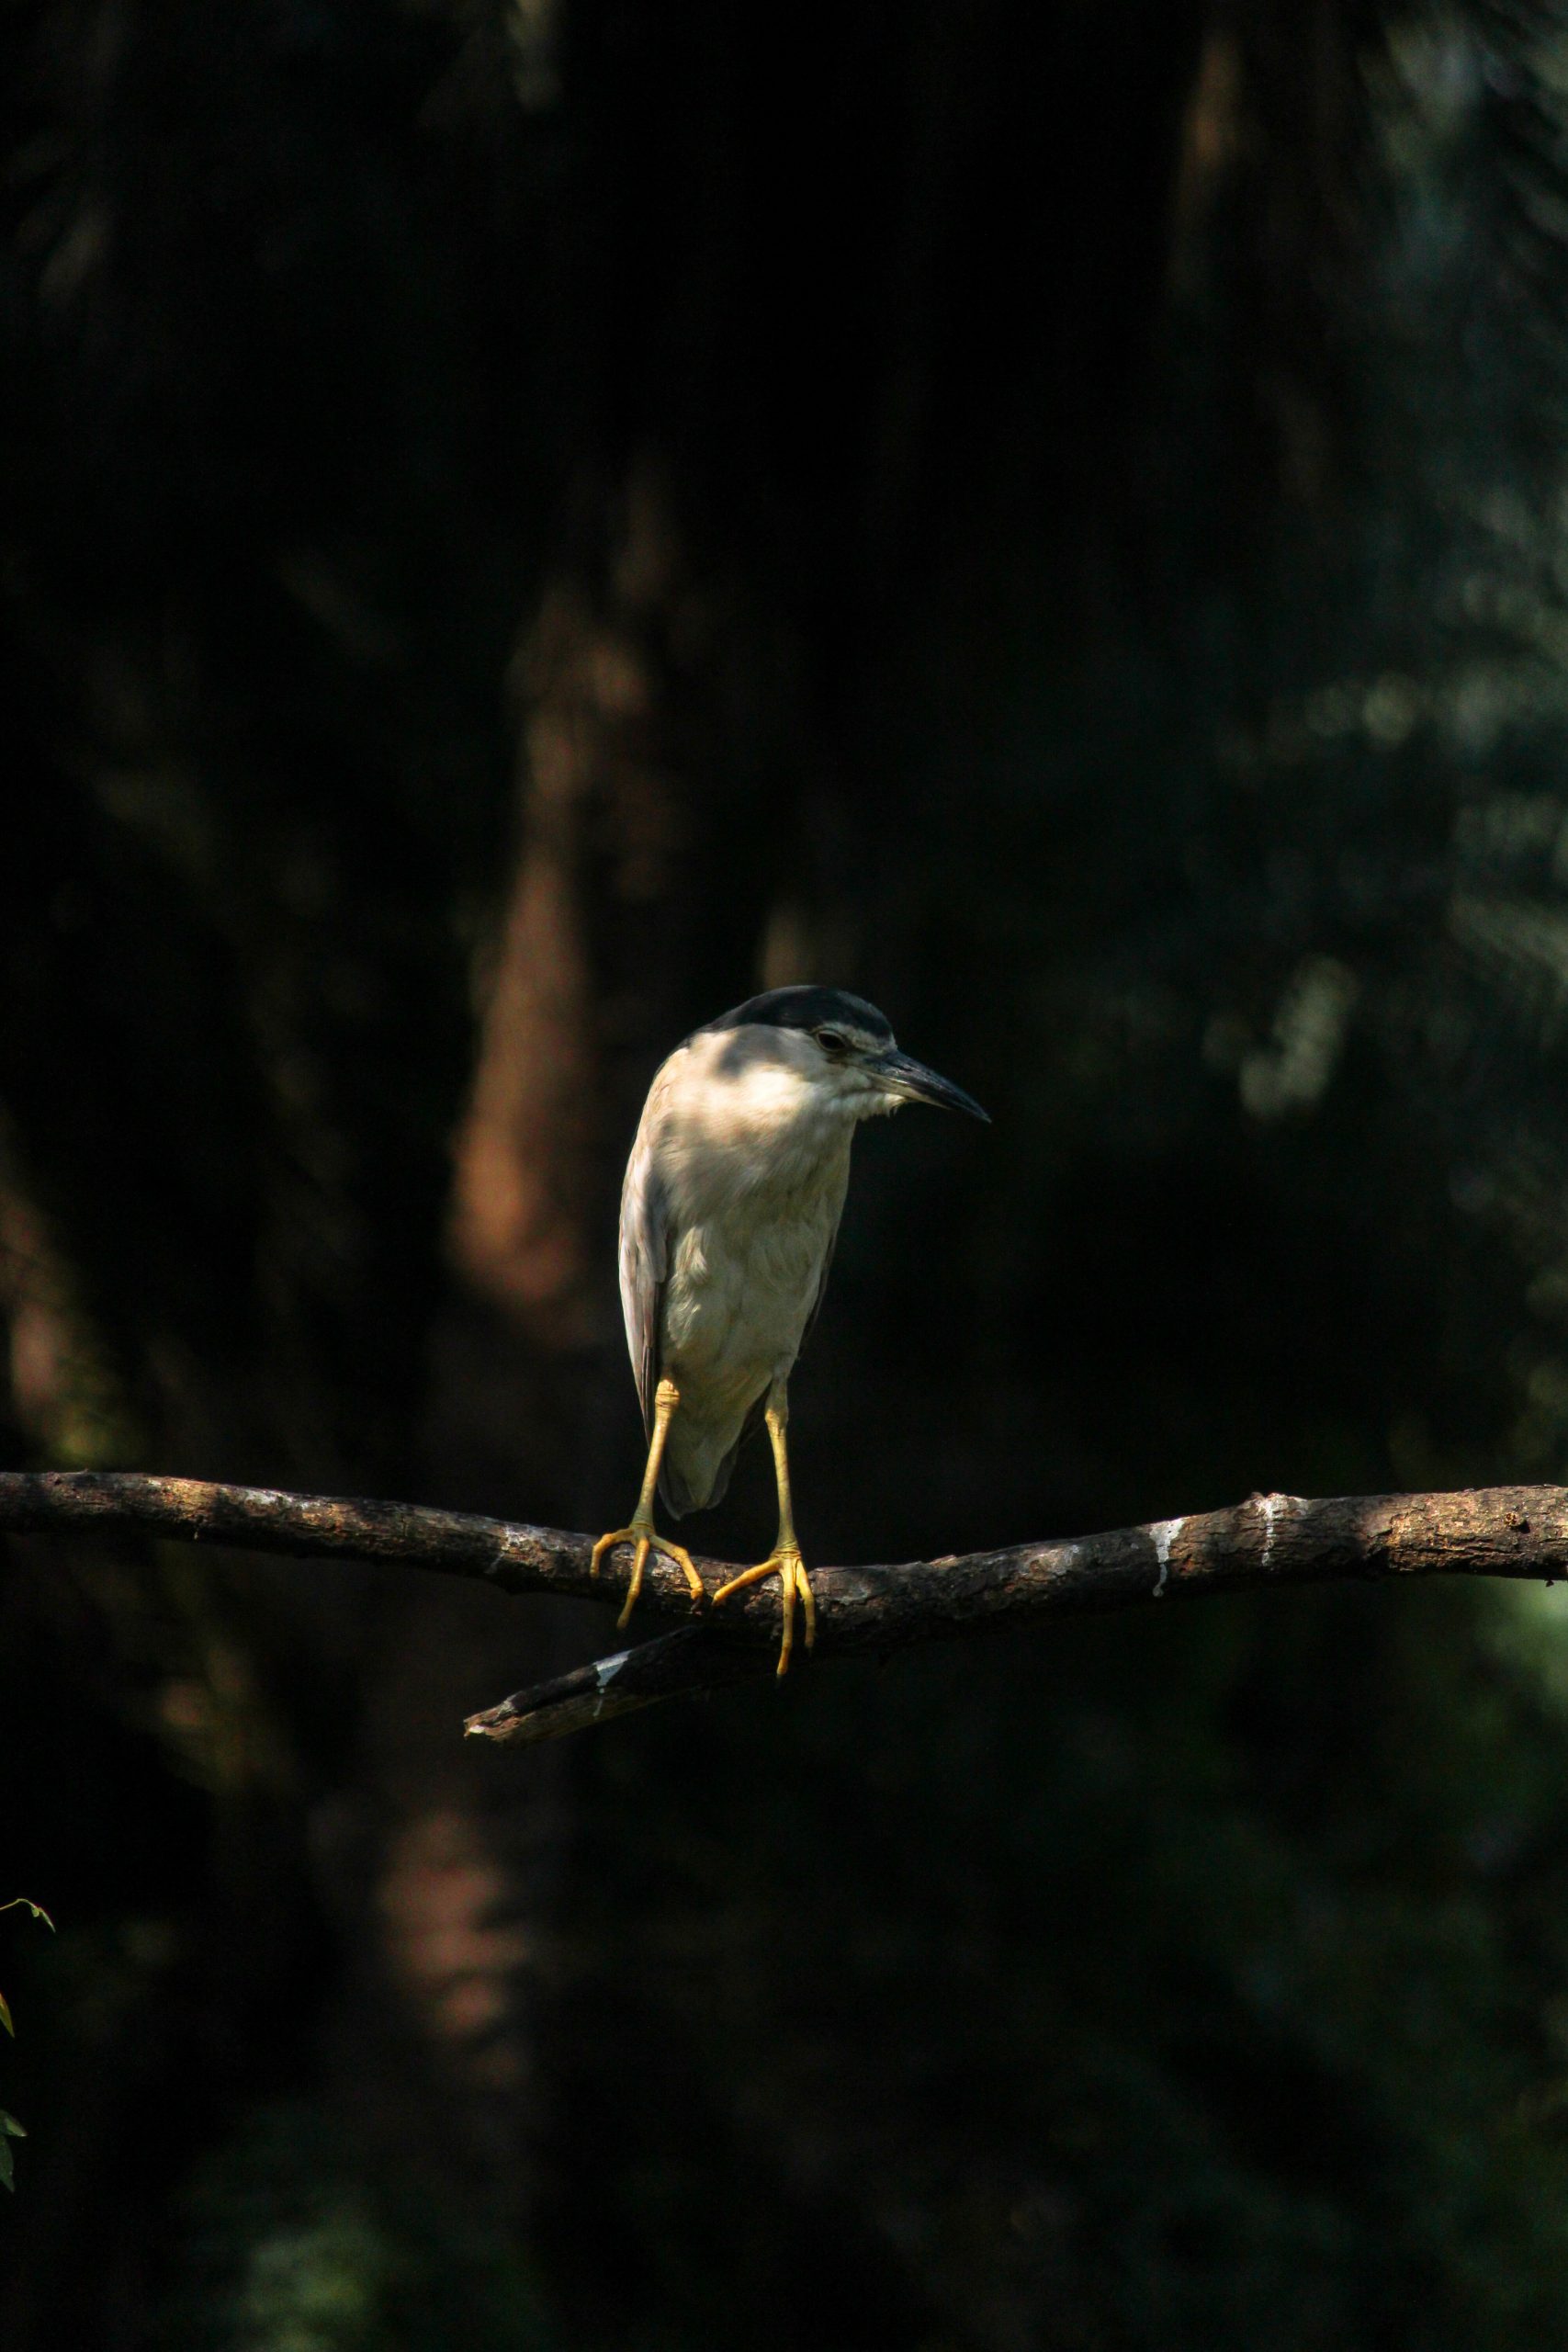 Night-Heron bird on a branch